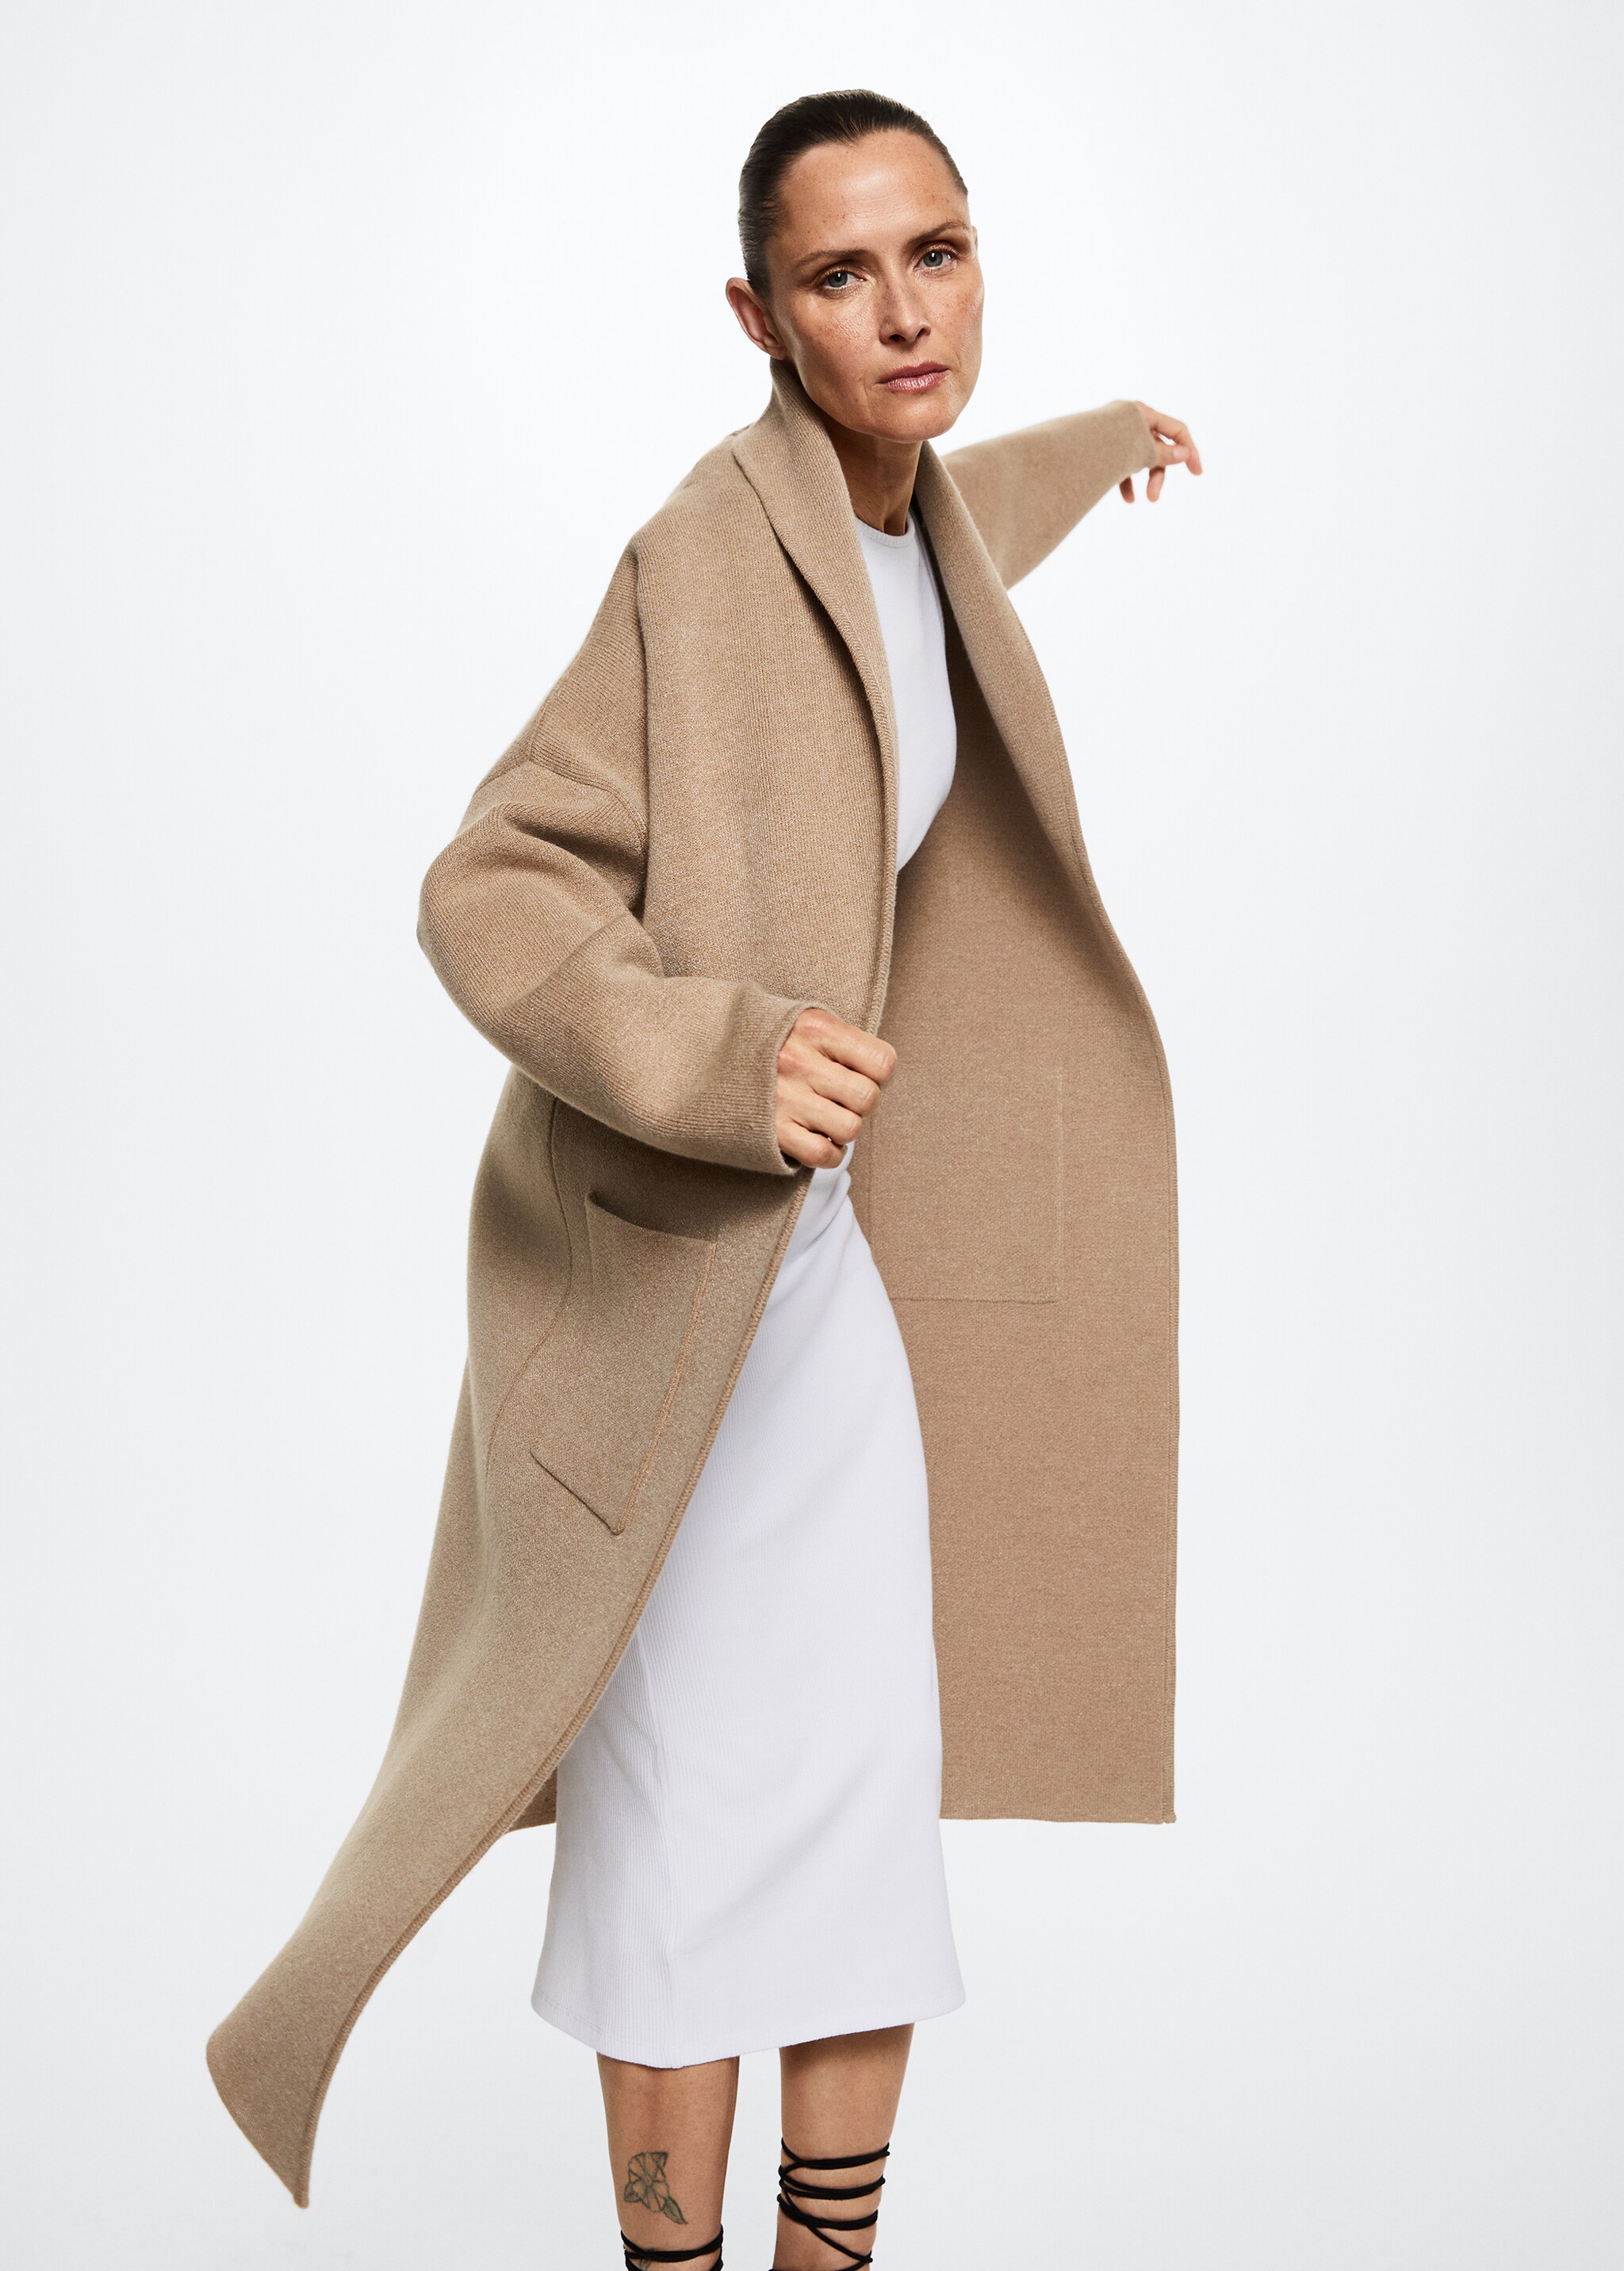 Oversized knitted coat with pockets - Medium plane